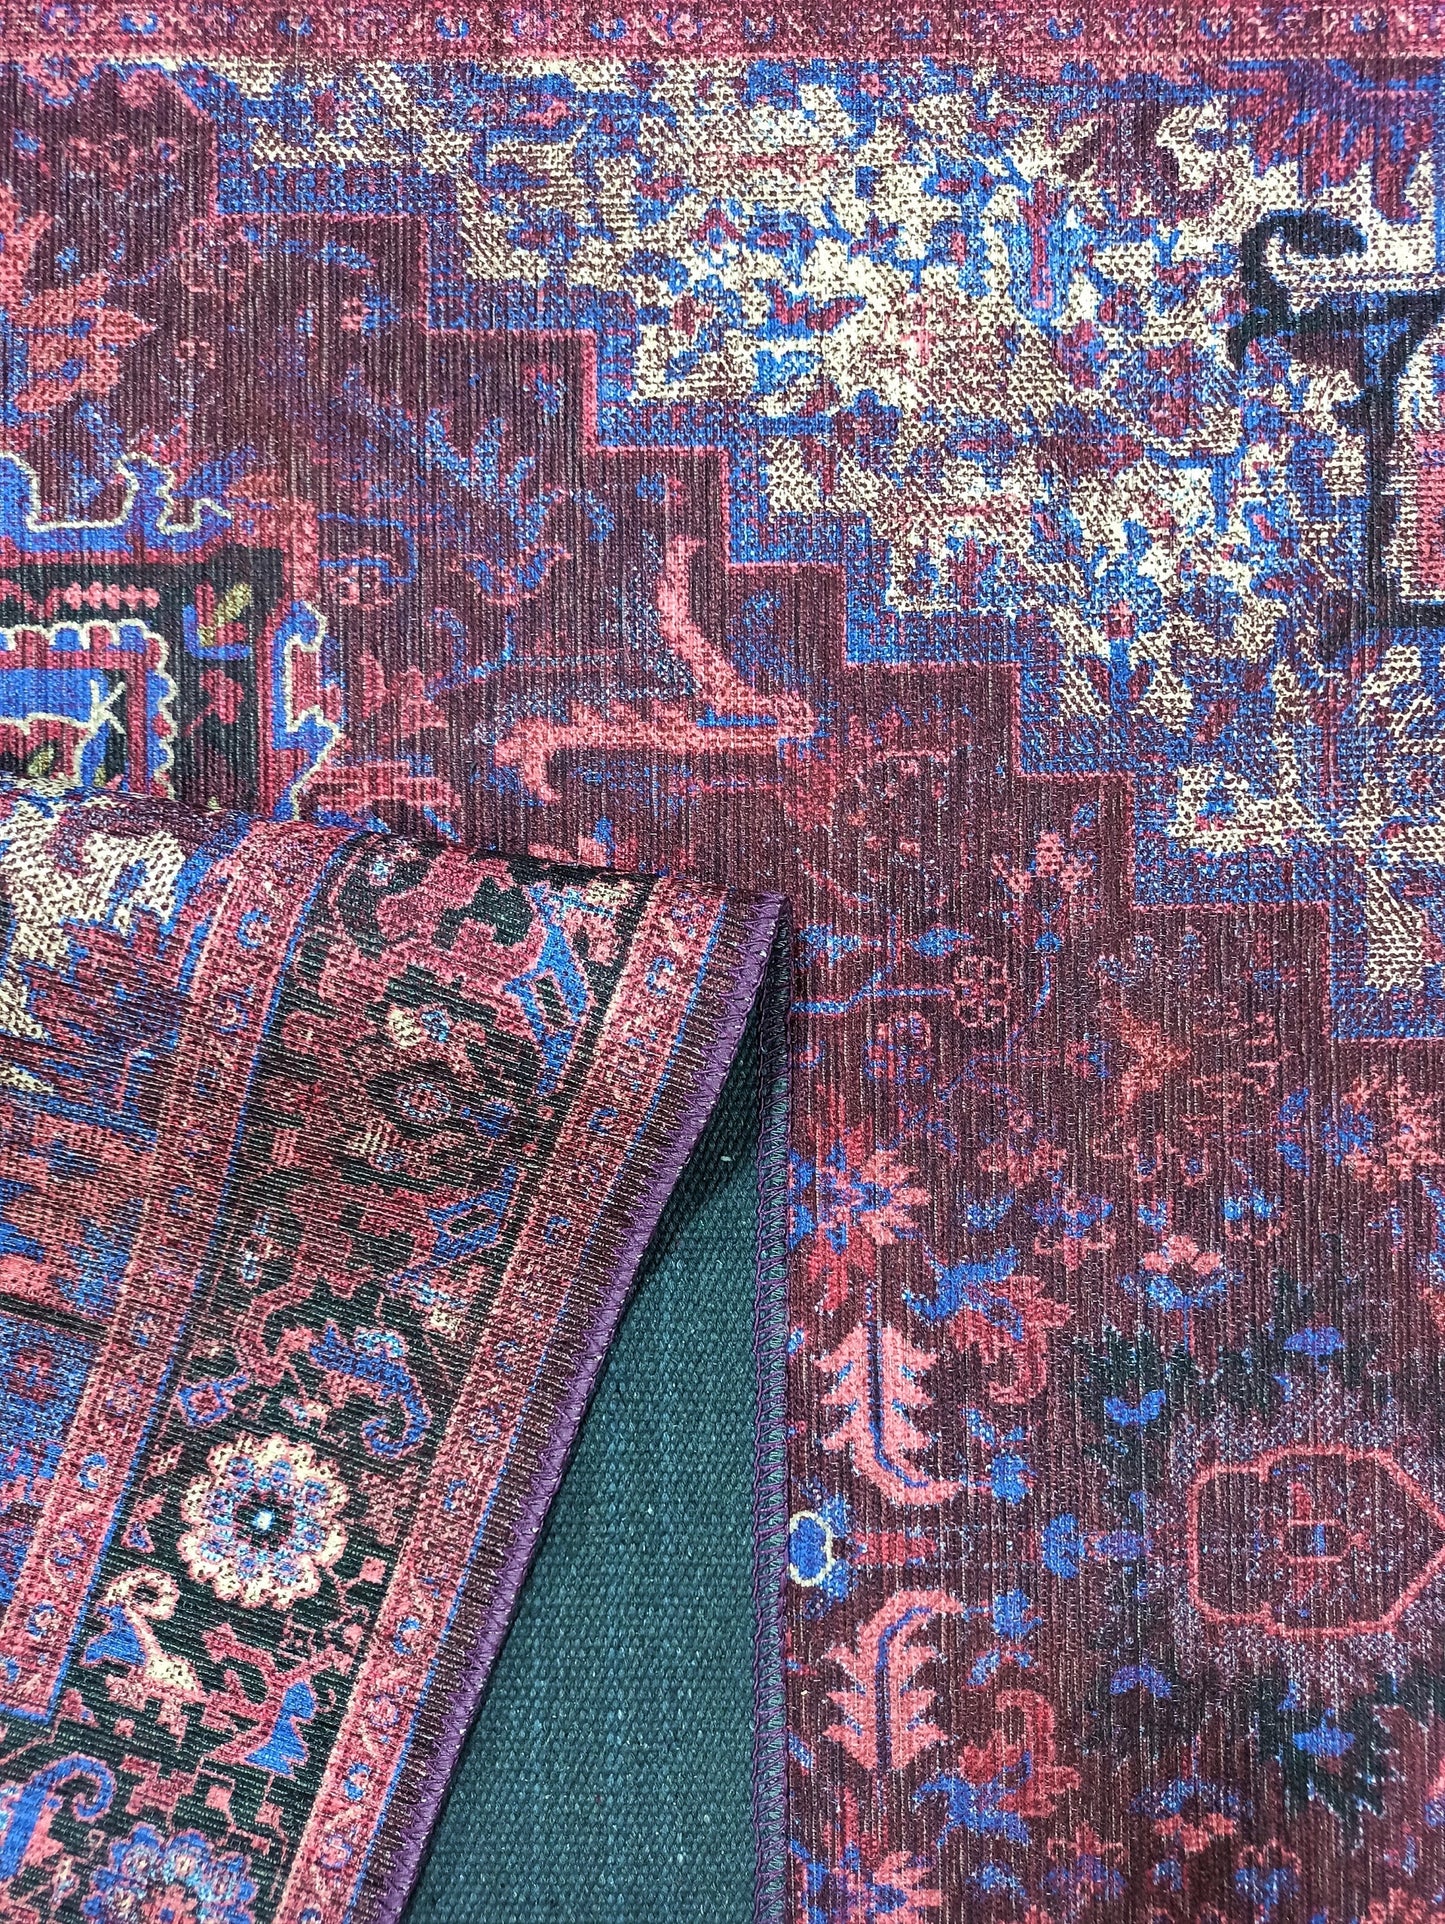 Unique Persian Vintage Rug, Shades of Burgundy Maroon Red Modern Oriental Floral Antique Heriz Inspired Area Rugs Living room Bedroom Hall